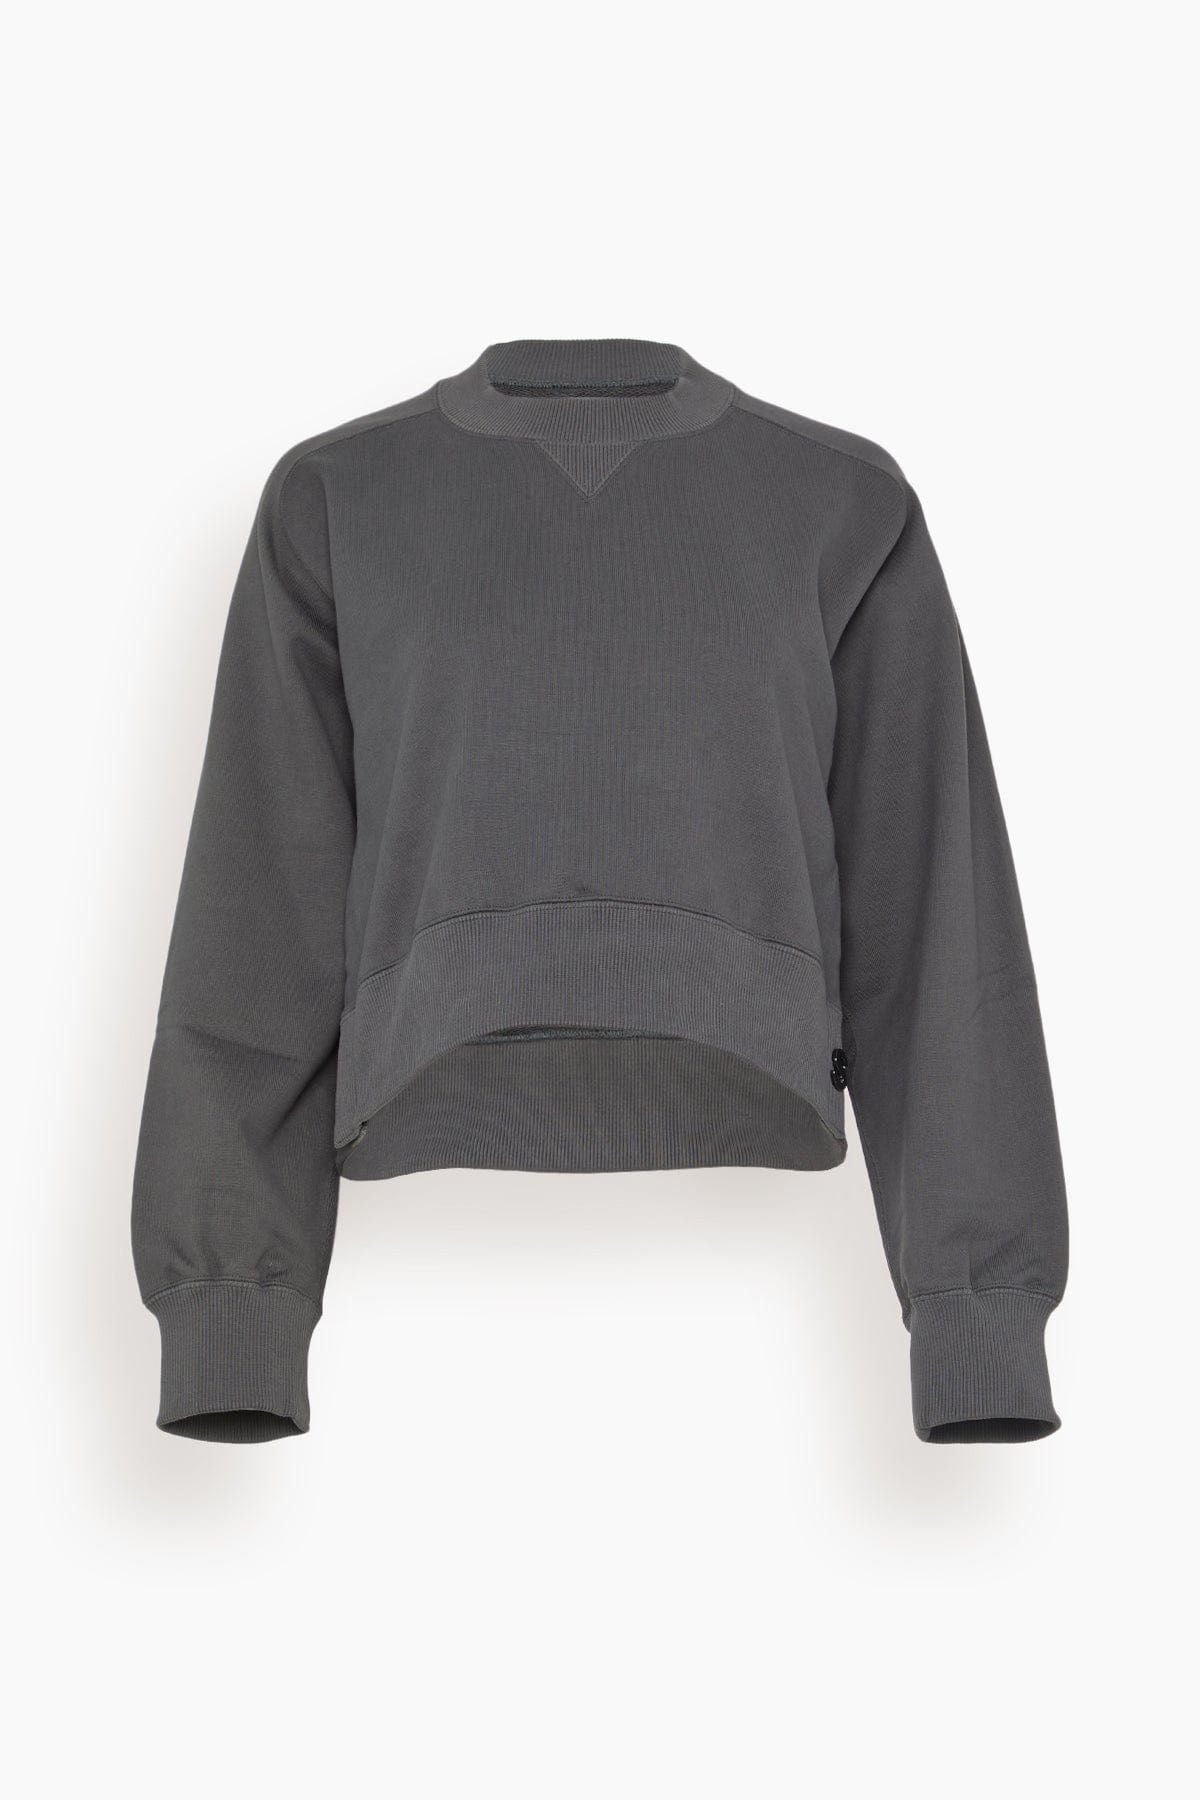 Sacai Sweatshirts Sweat Jersey Pullover in Charcoal Gray